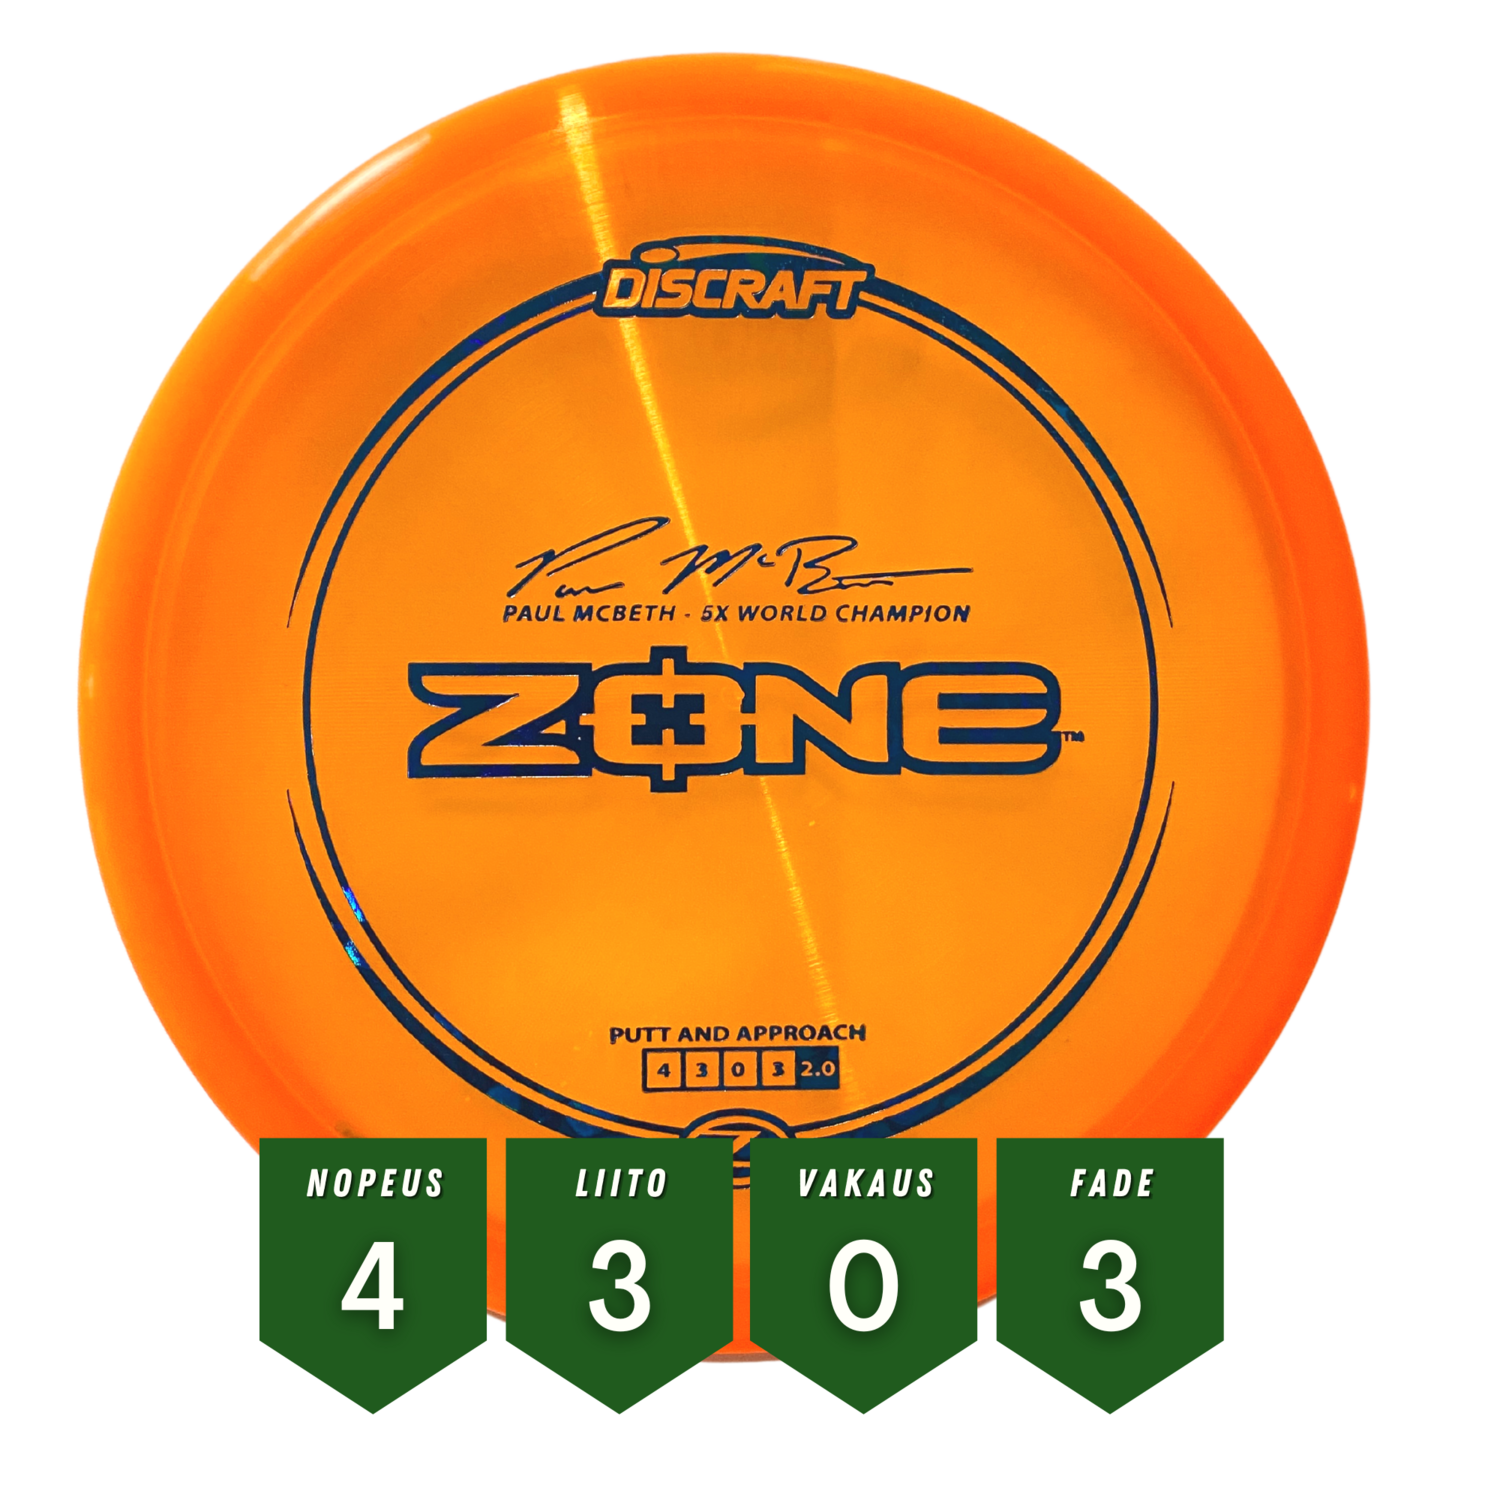 Discraft Z Line Zone -  Paul McBeth